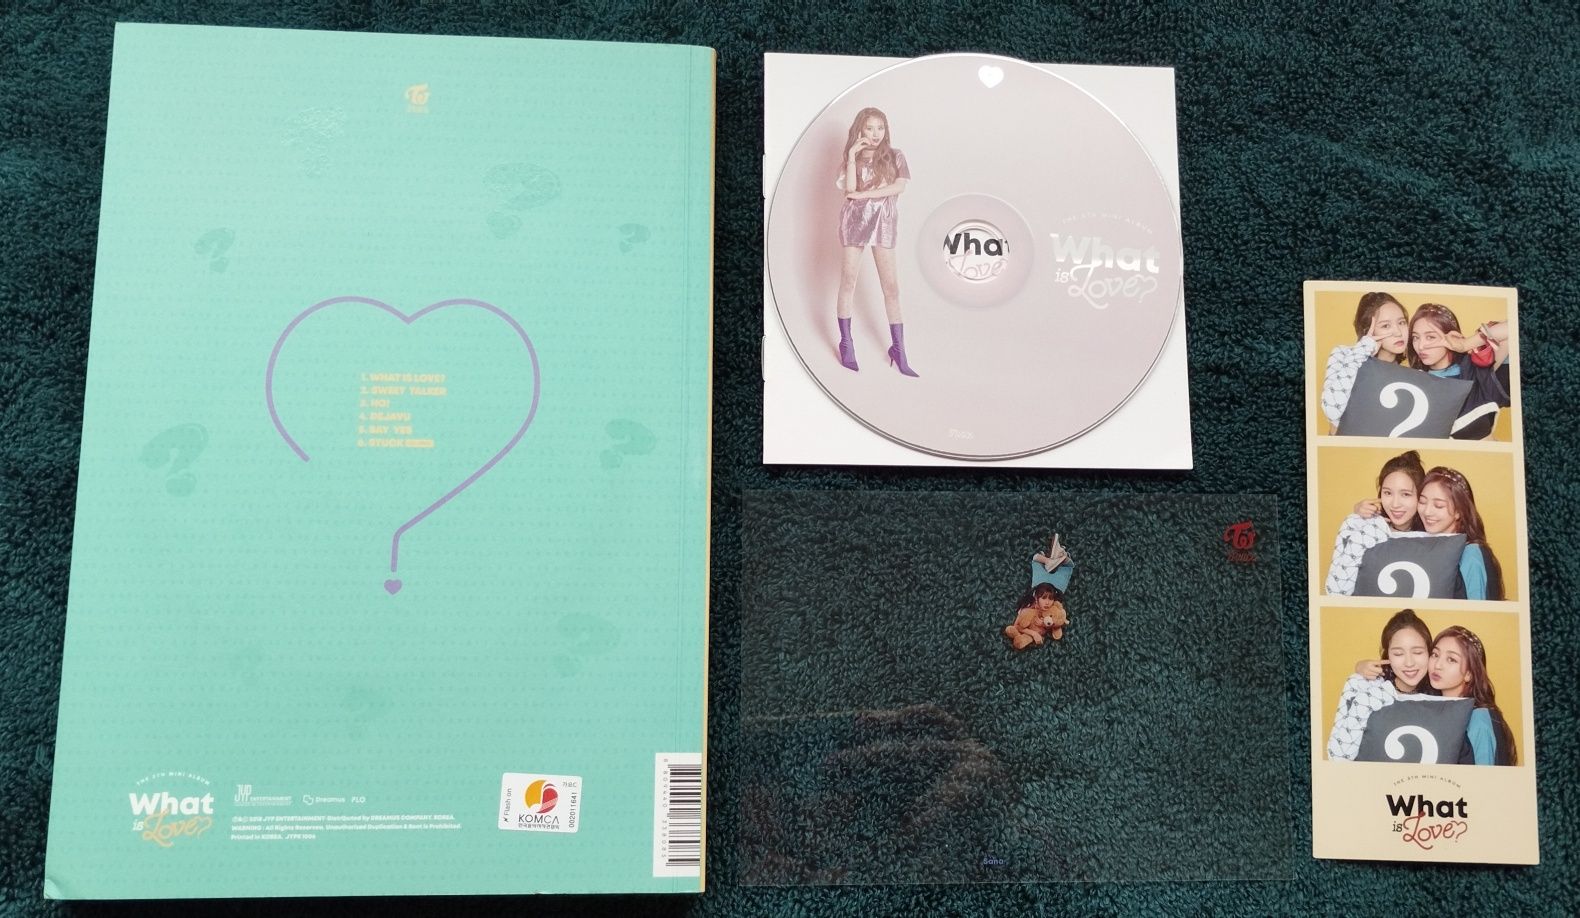 Album KPOP Twice "What is love"